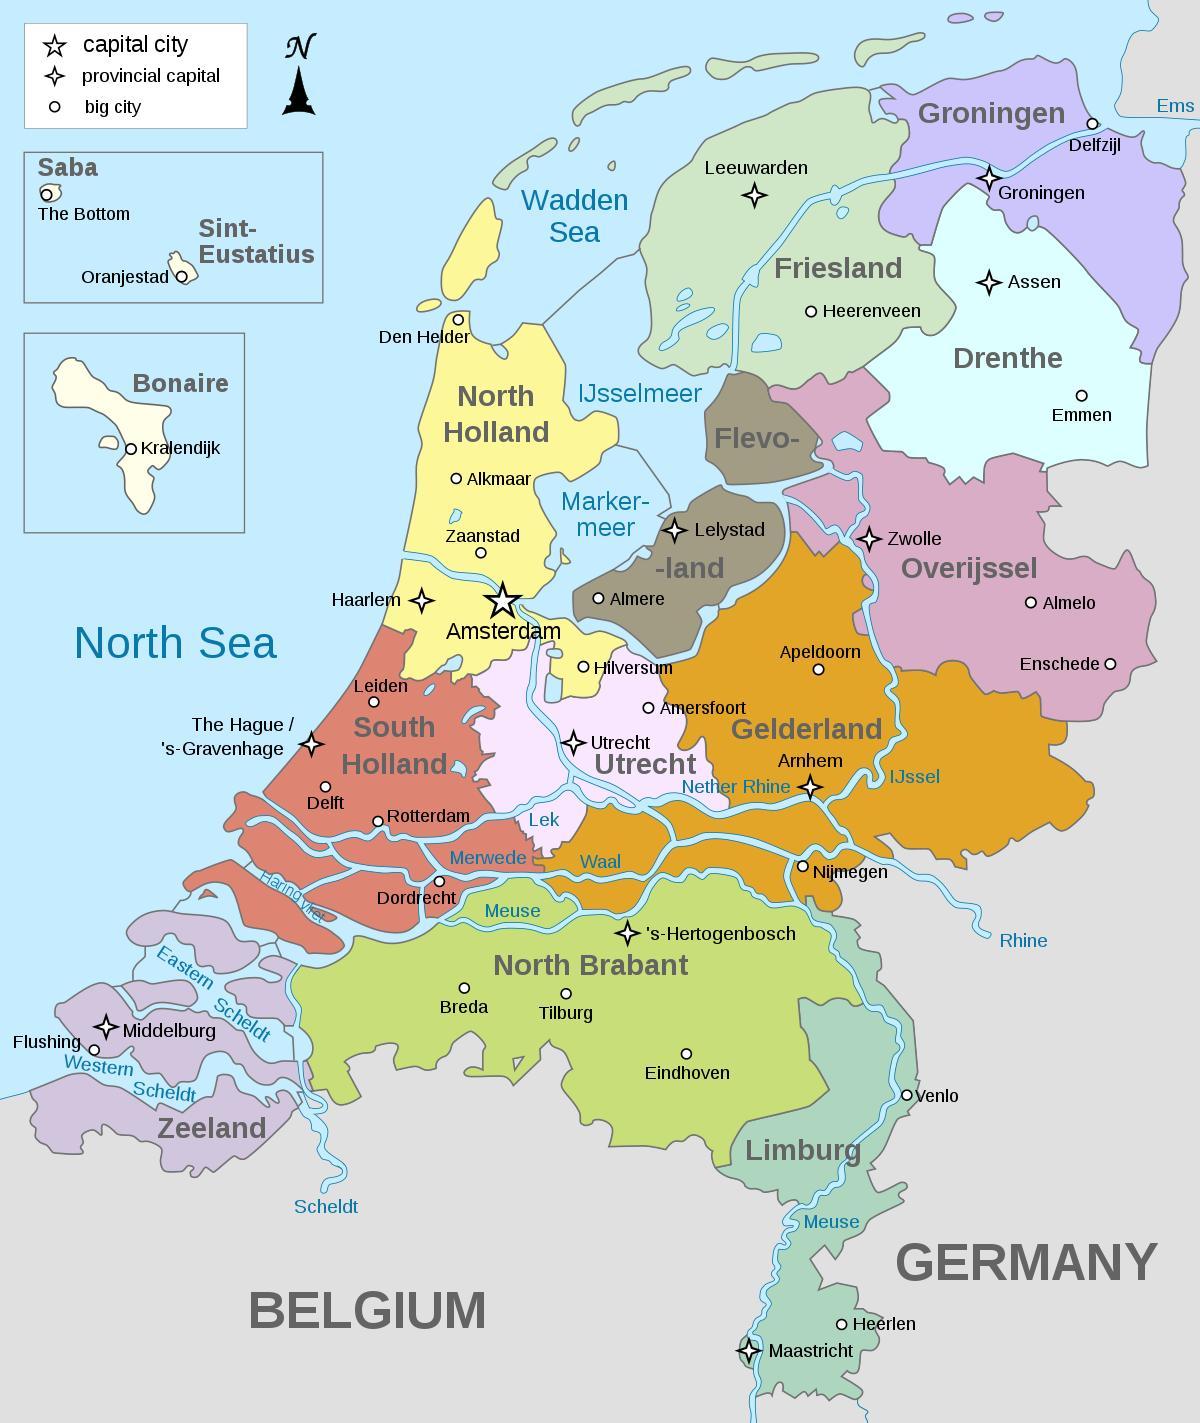 Amsterdam Holandia mapie